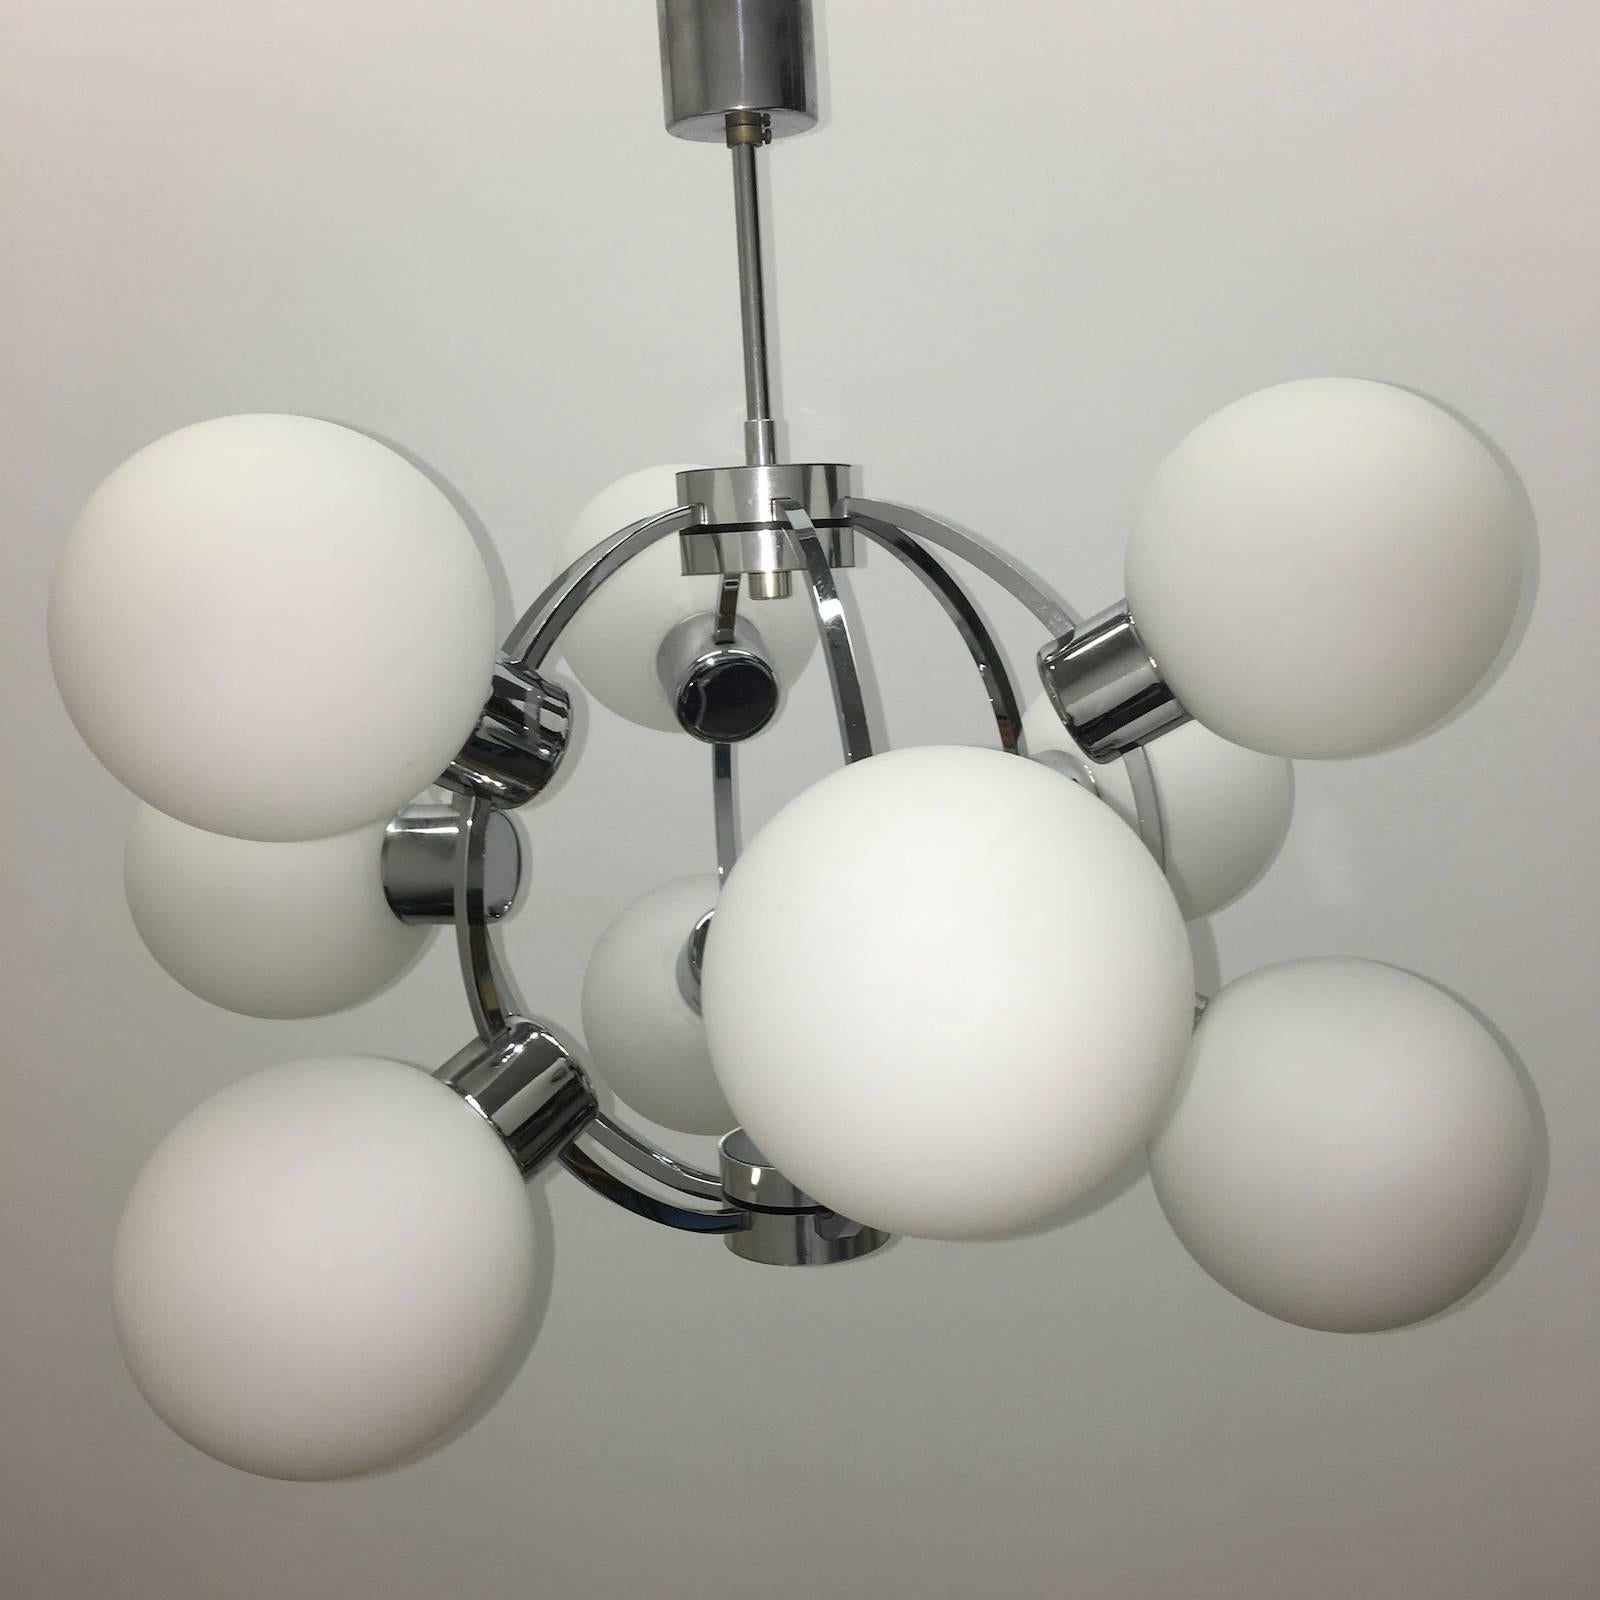 A nine-arm circa 1960s chrome milk glass Sputnik orbit chandelier with interior lights. Each Fixture requires nine European E14 candelabra bulbs, each bulb up to 40 watts.